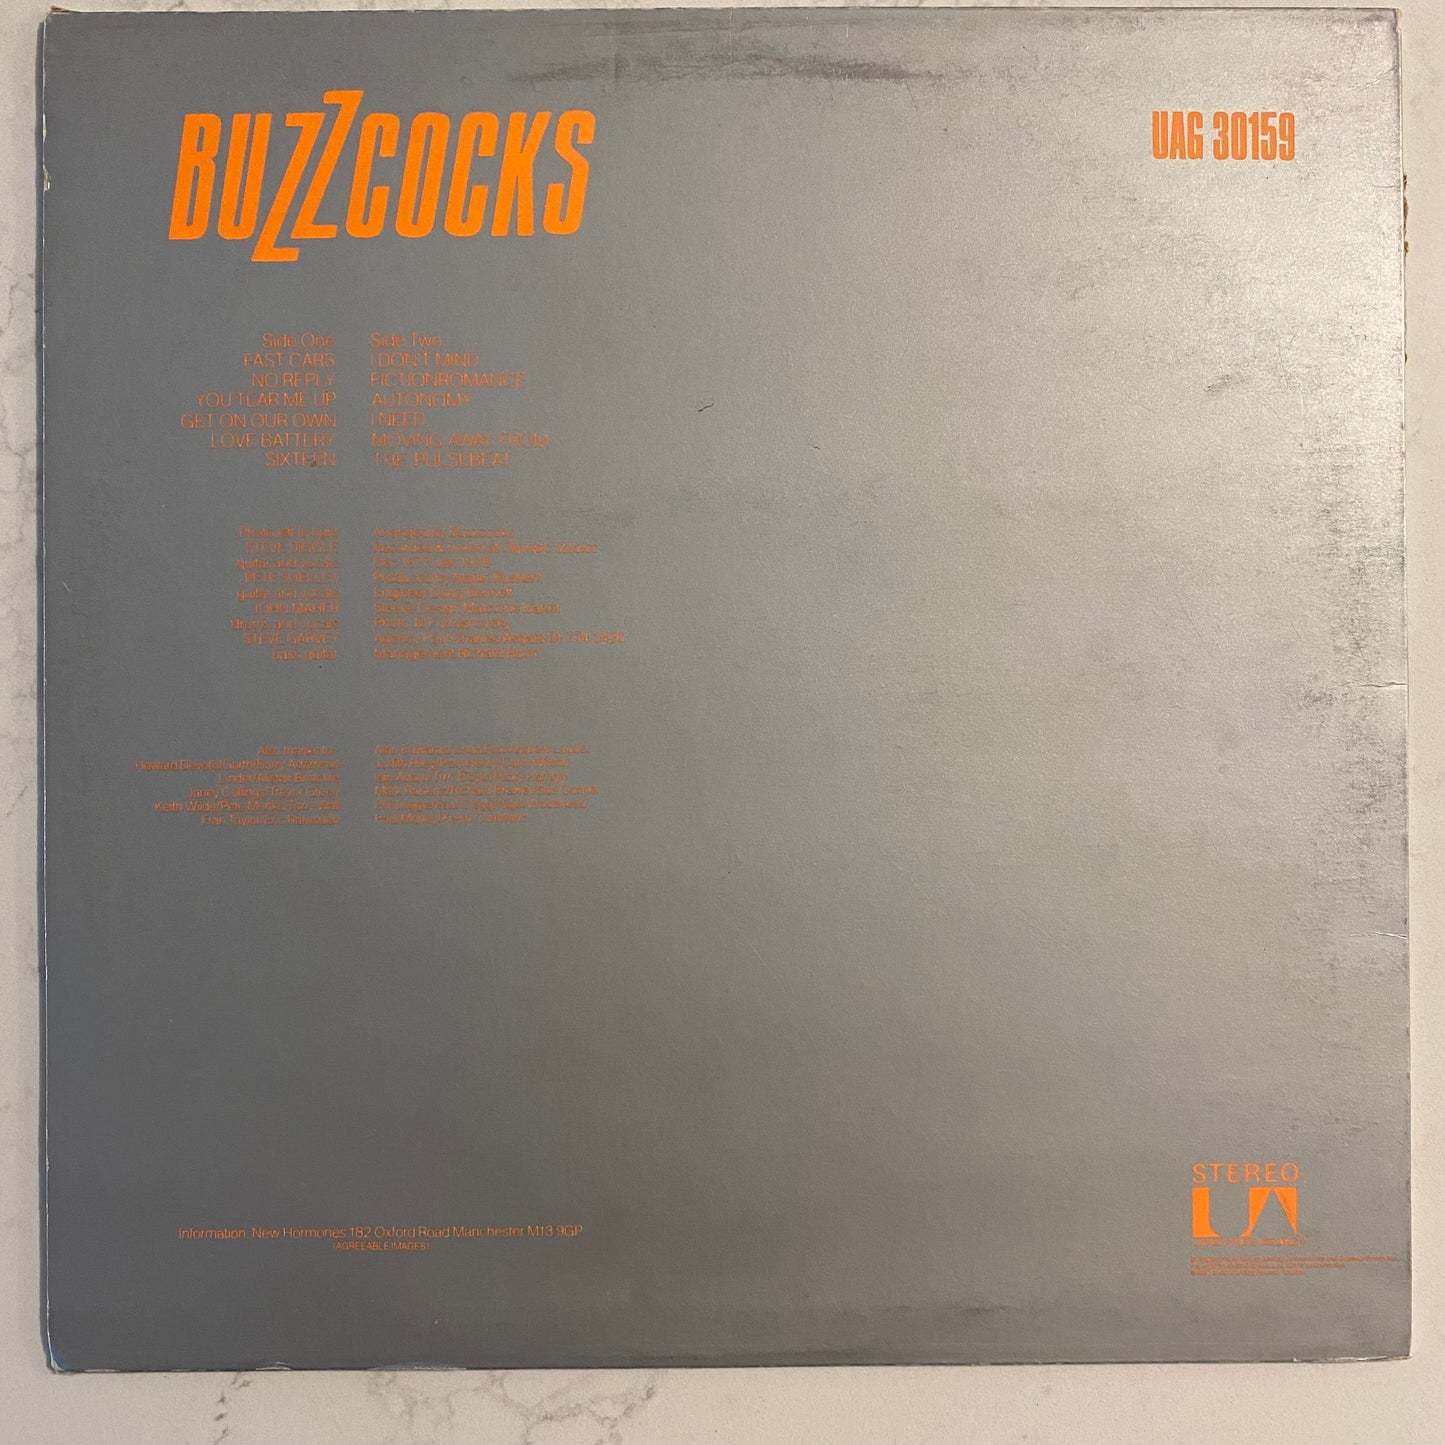 Buzzcocks - Another Music In A Different Kitchen (LP, Album, Por) (L)